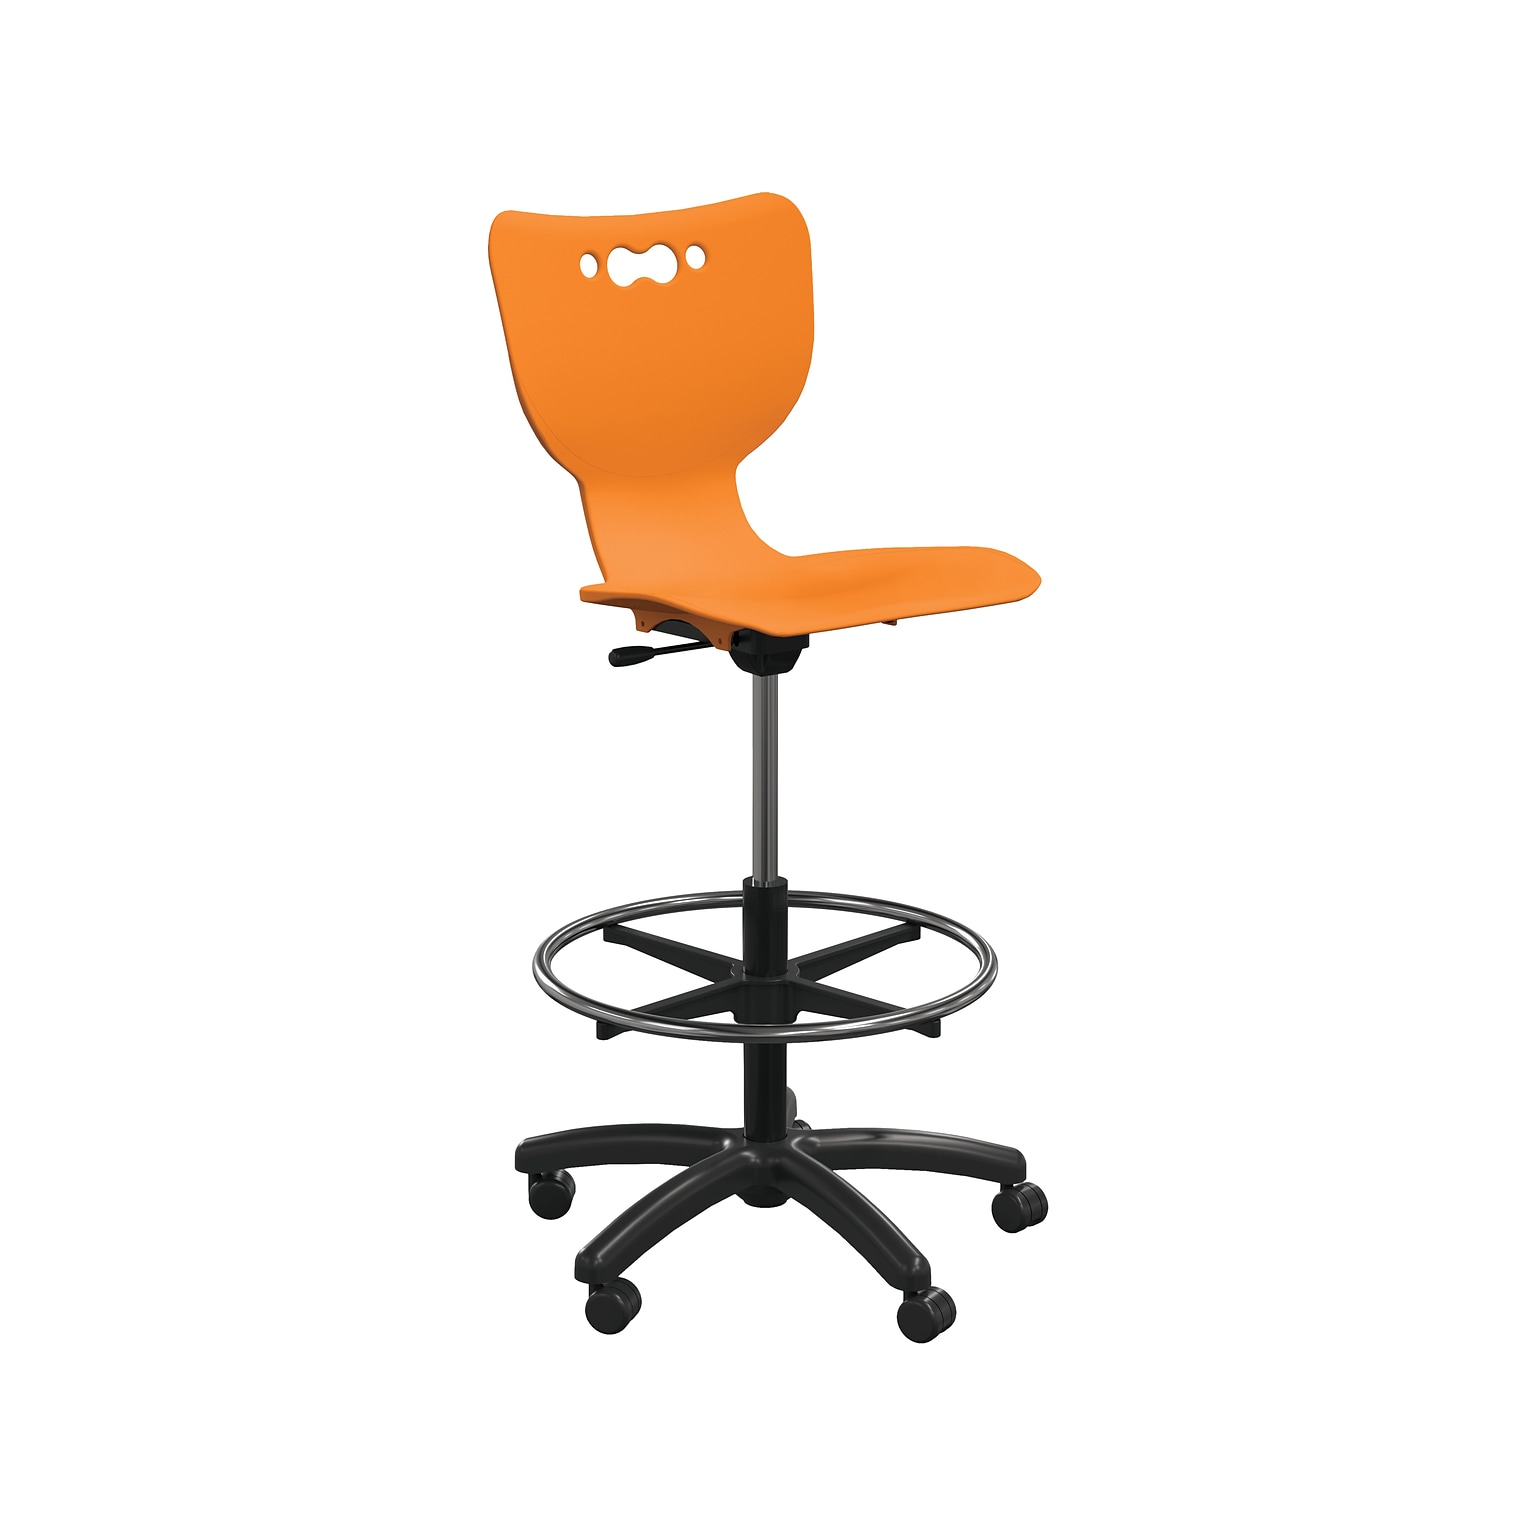 MooreCo Hierarchy 5-Star Plastic School Chair, Orange (53512-ORANGE-NA-HC)